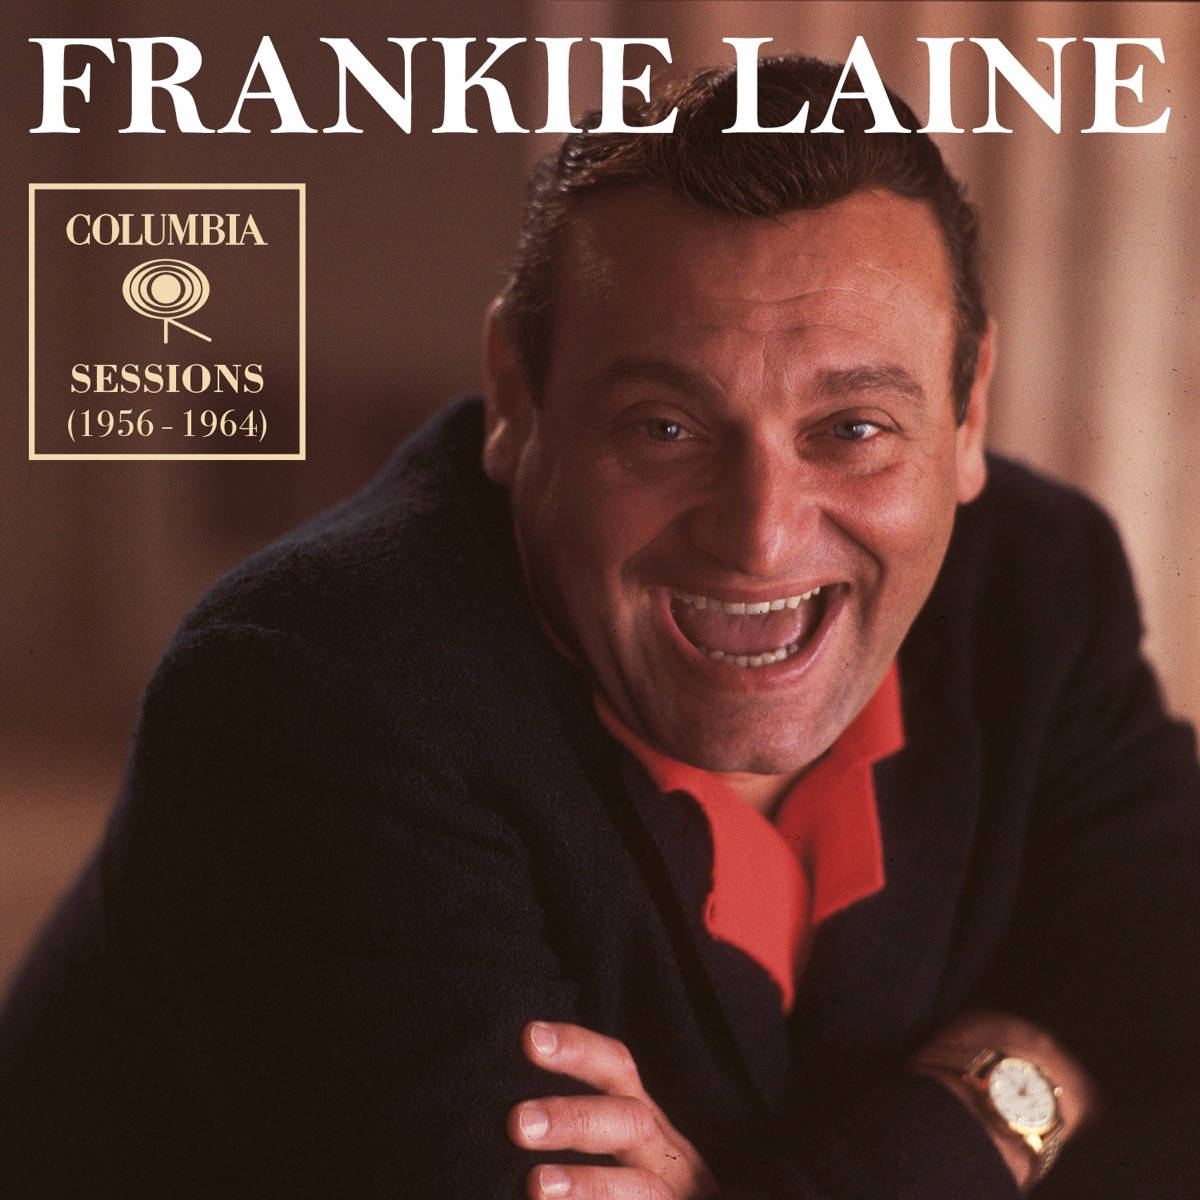 Frankie Laine Columbia Sessions Album Cover Wallpaper